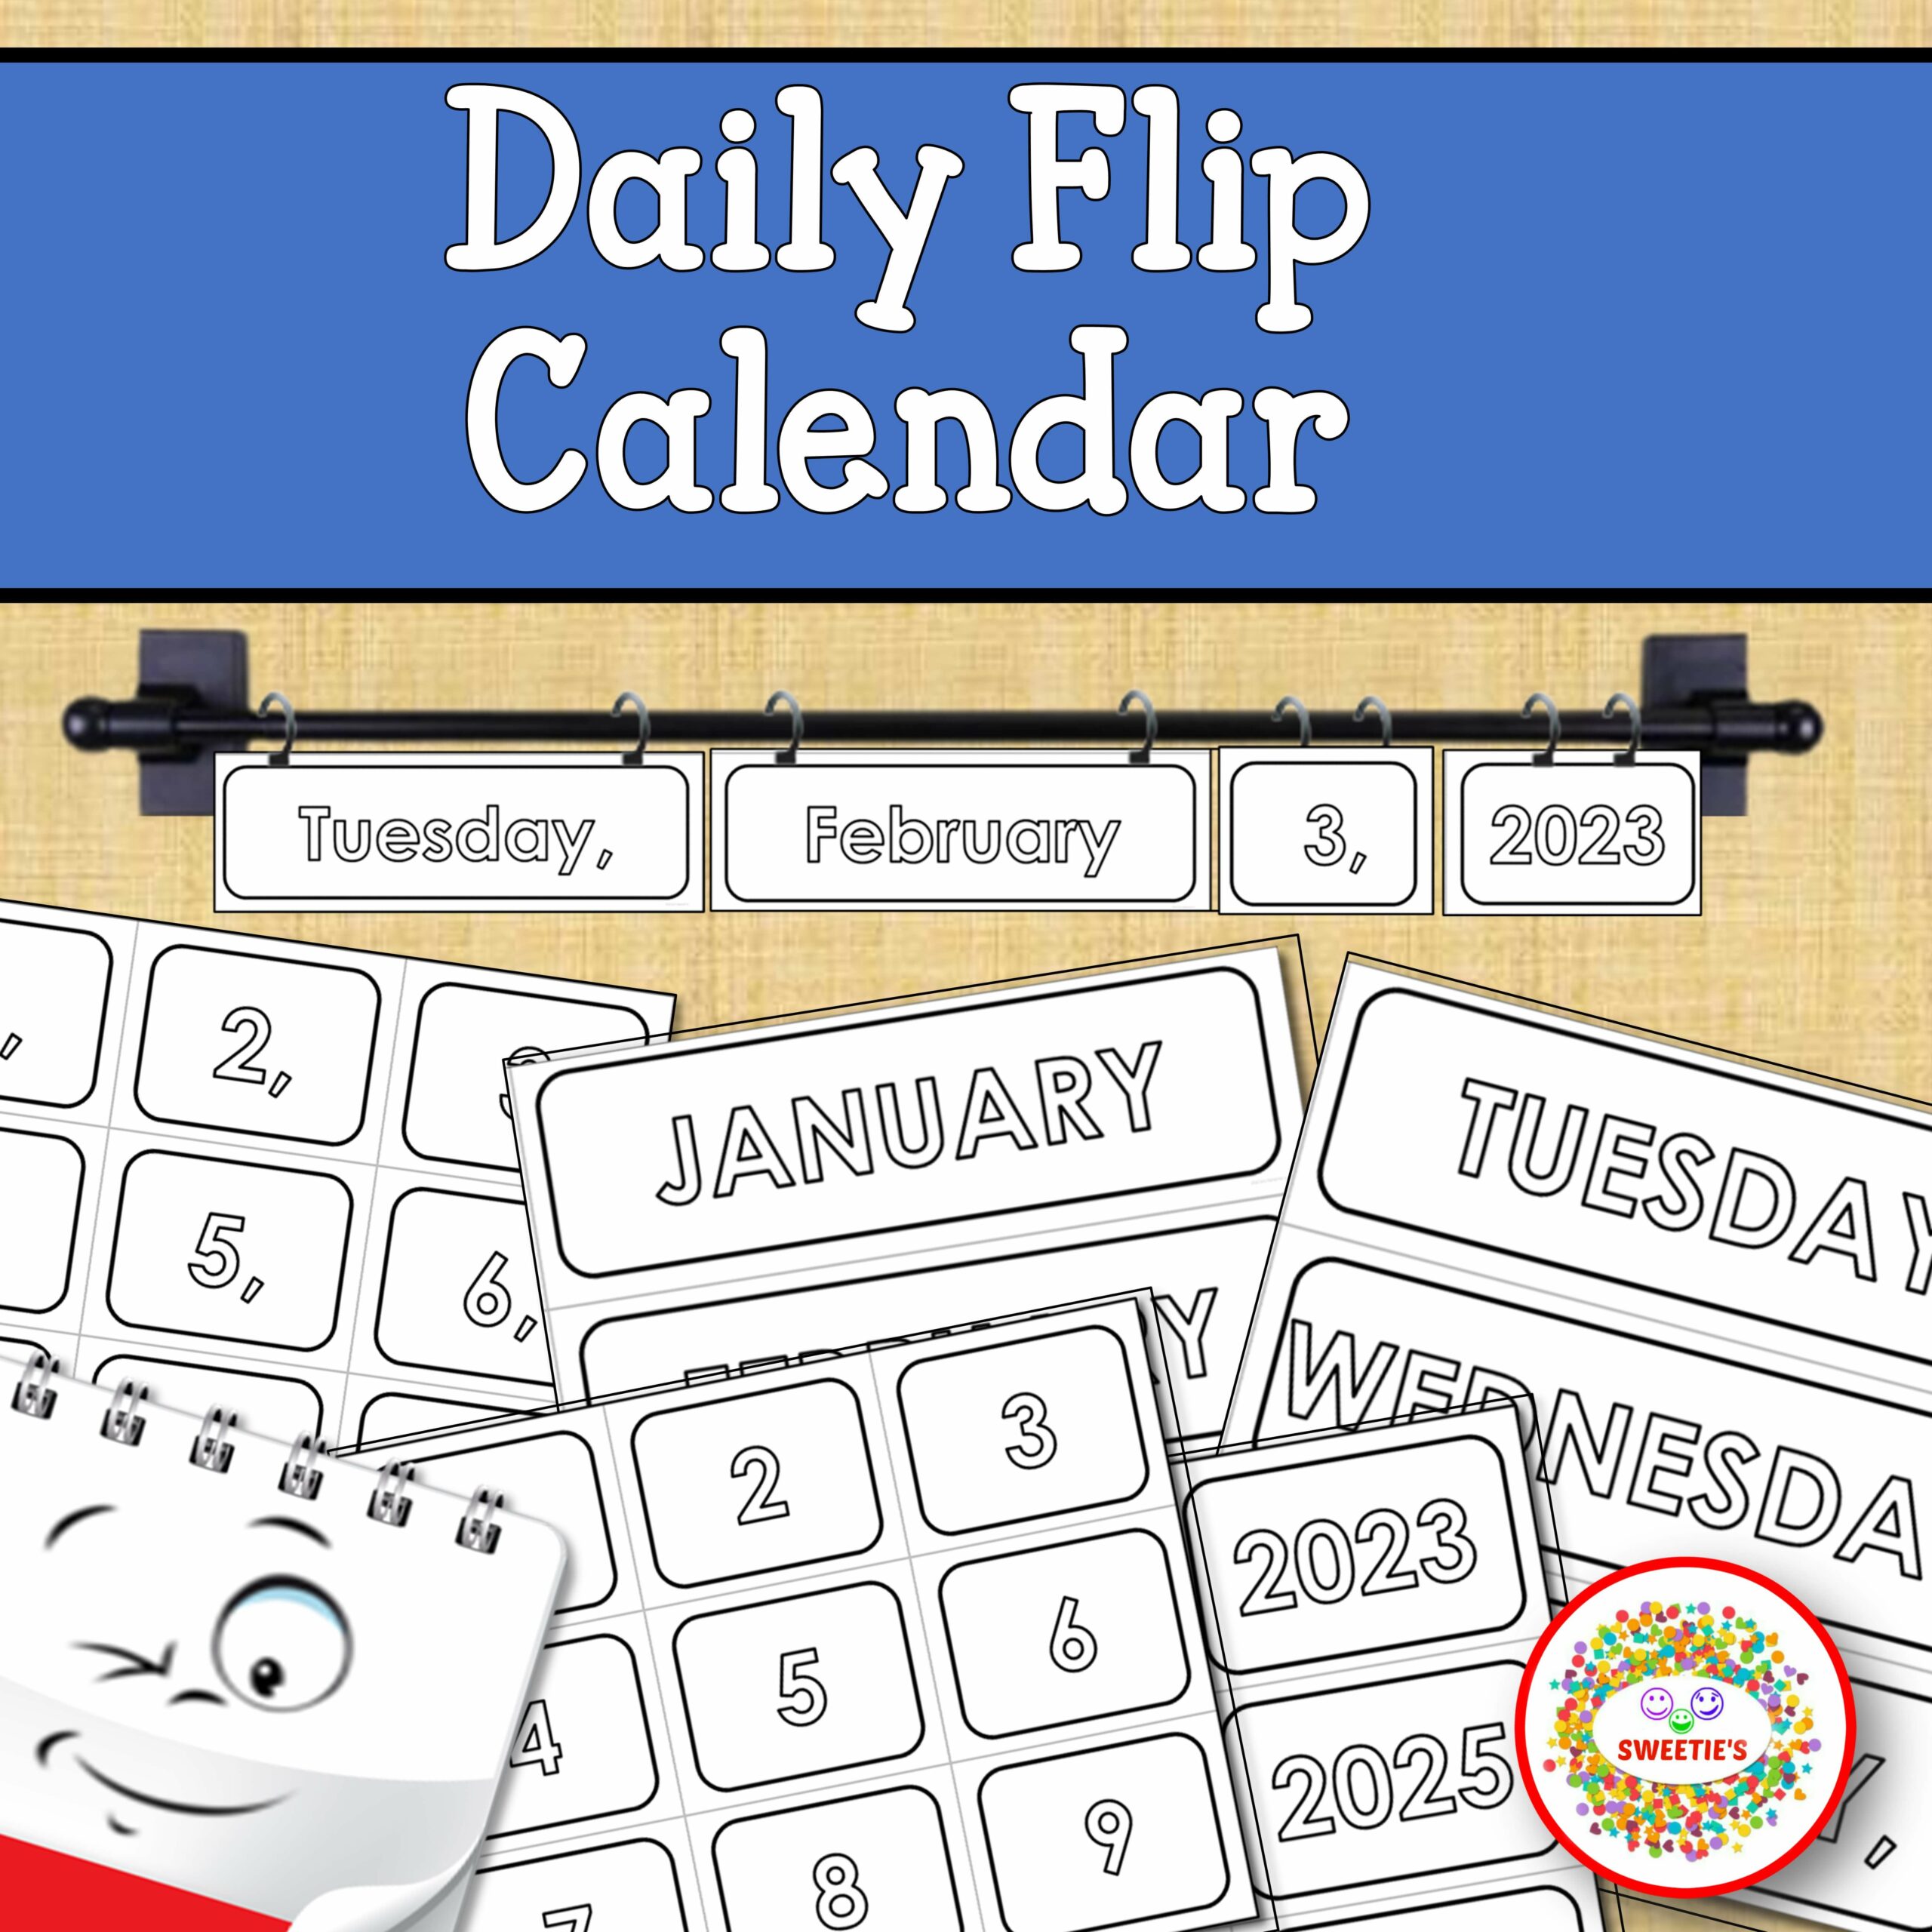 Daily Flip Calendar Cards 2022 to 2051 Plain Black Theme